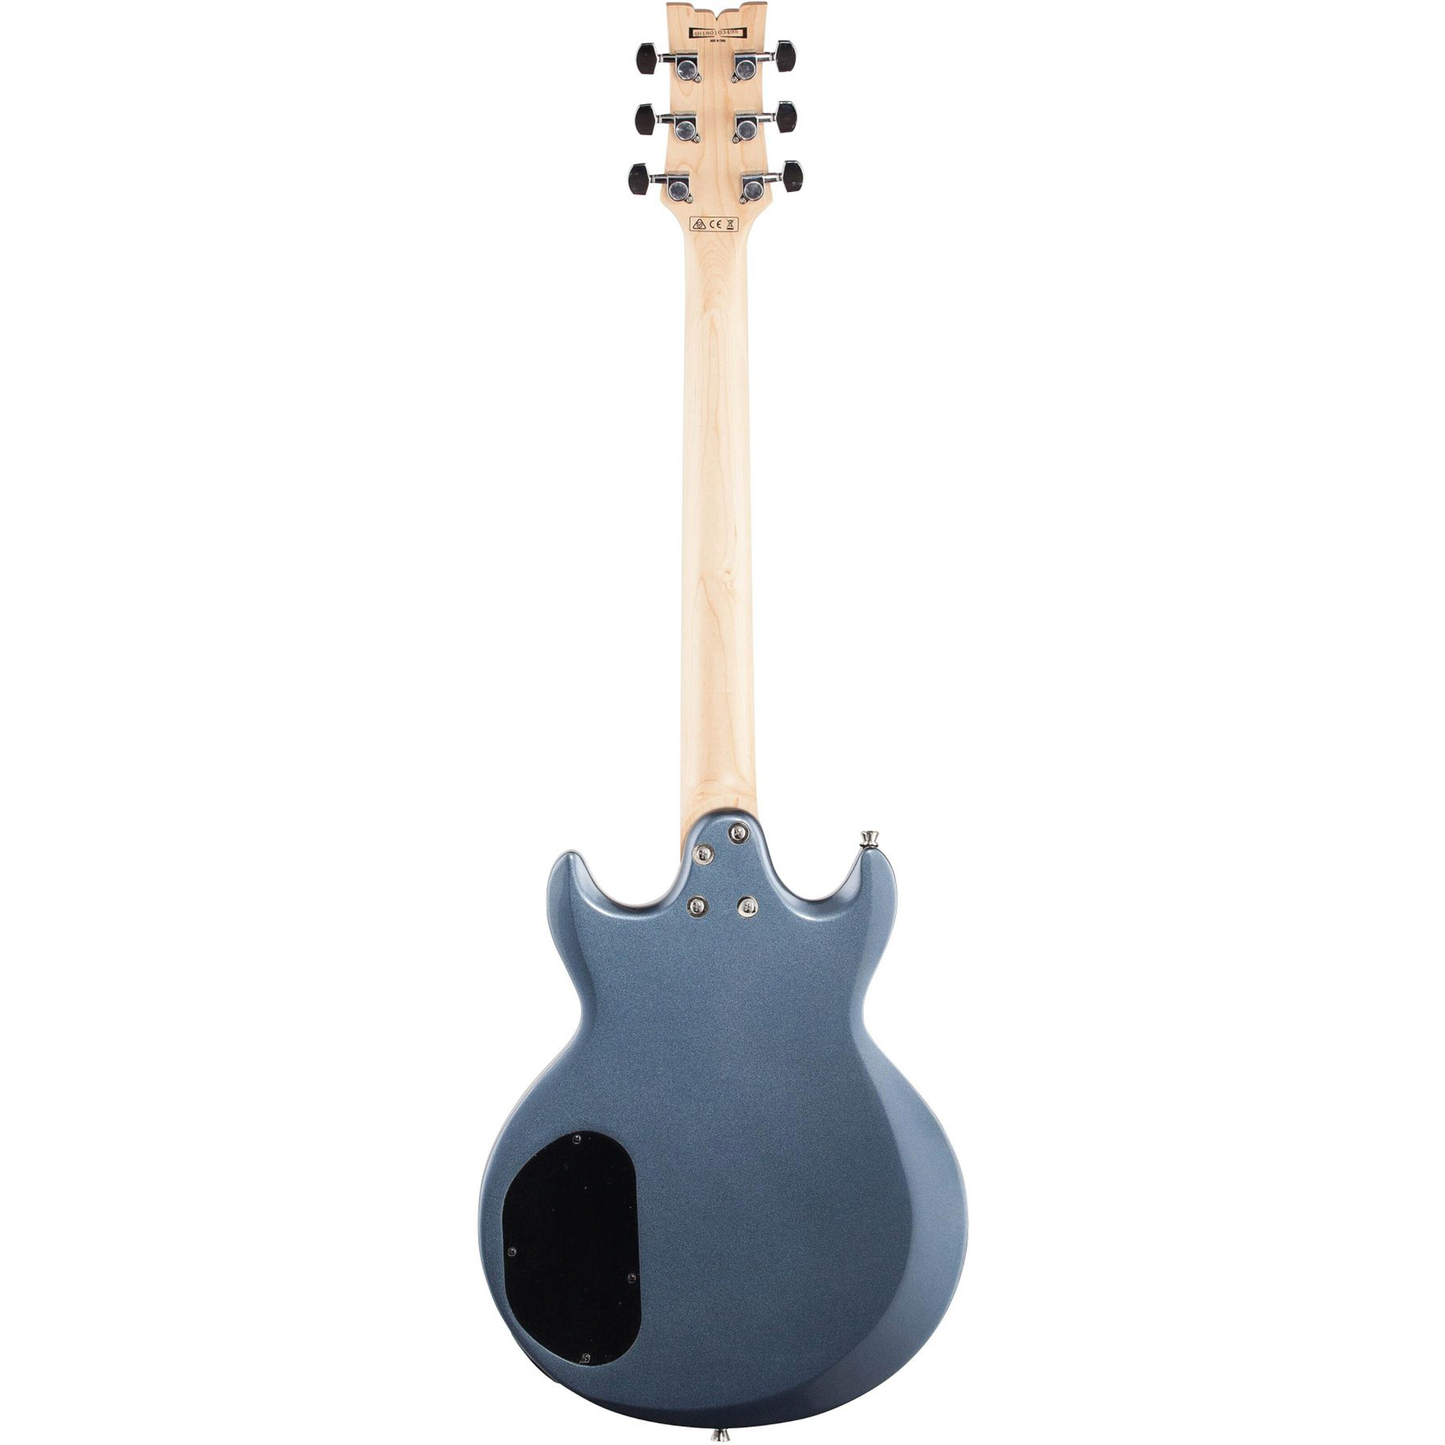 Ibanez AX120 Electric Guitar in Baltic Blue Metallic